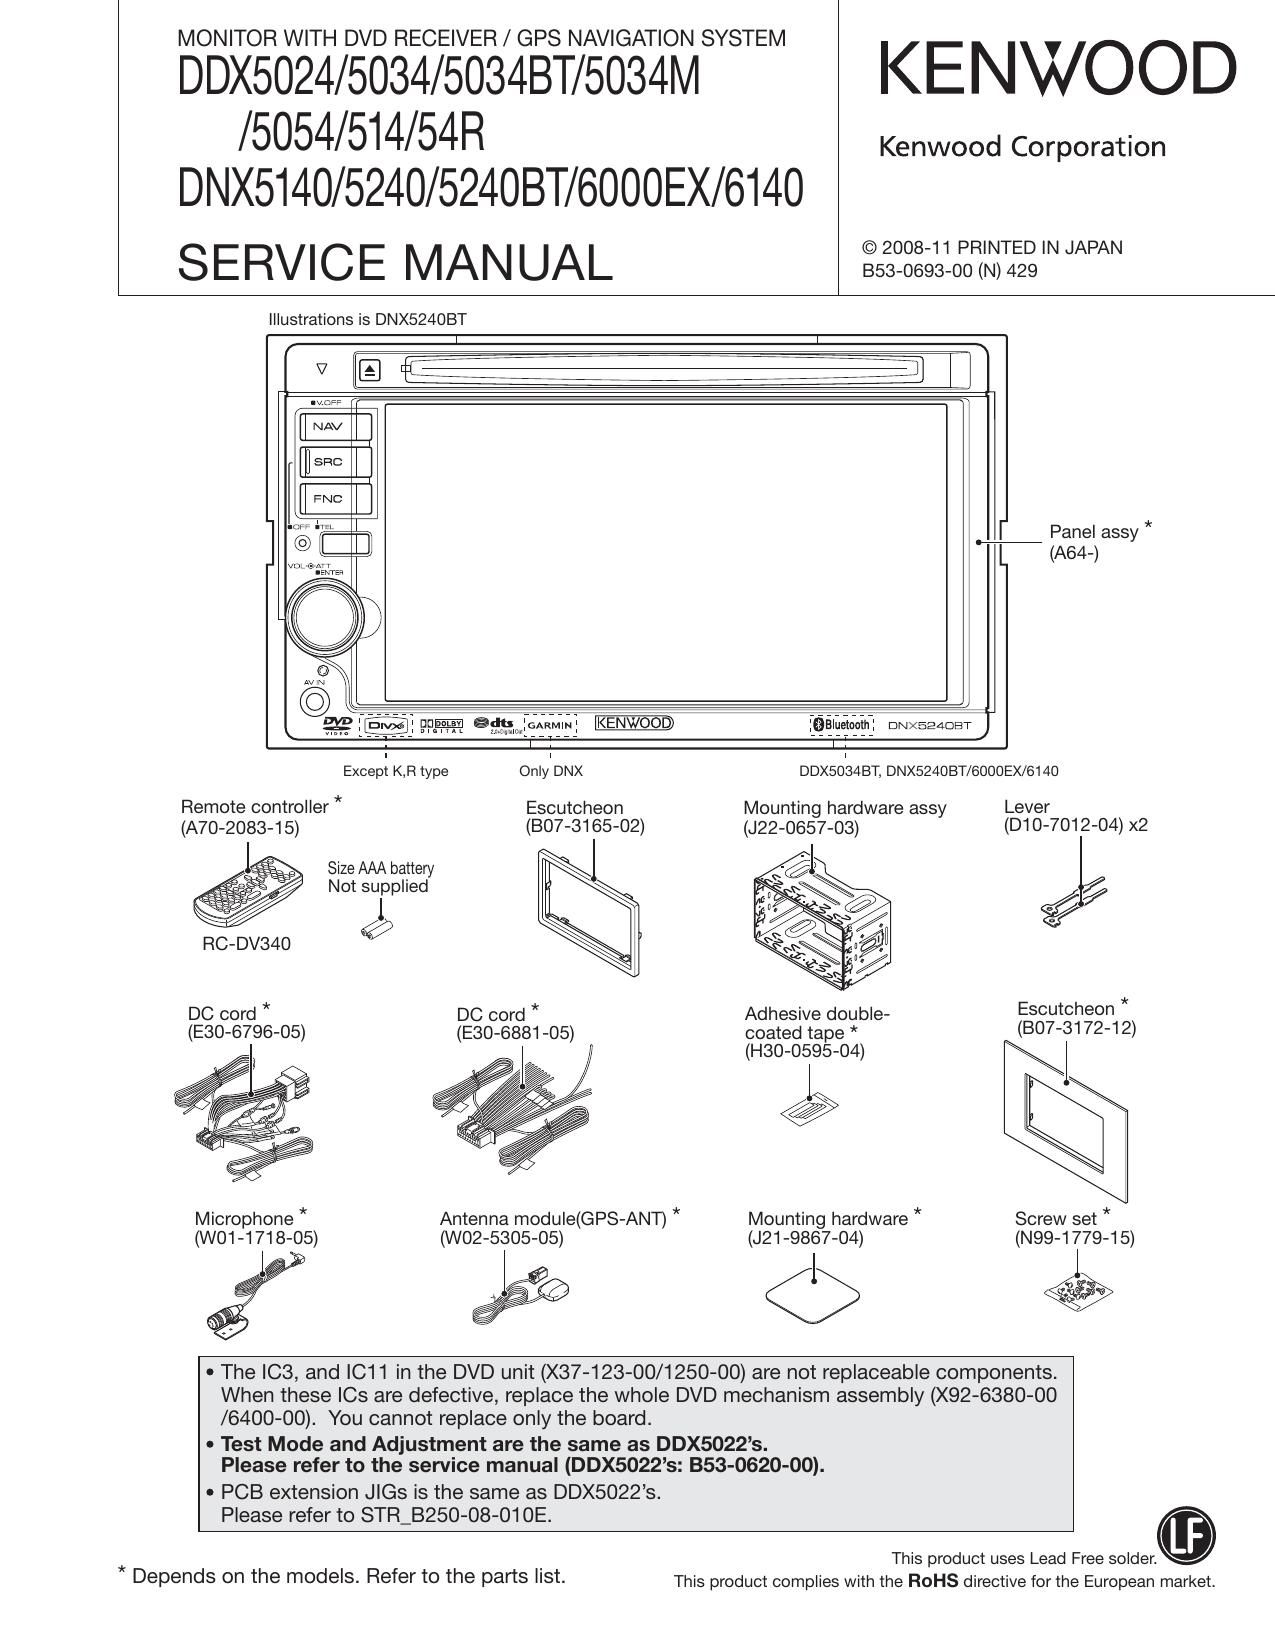 Kenwood DDX 5034 M HU Service Manual